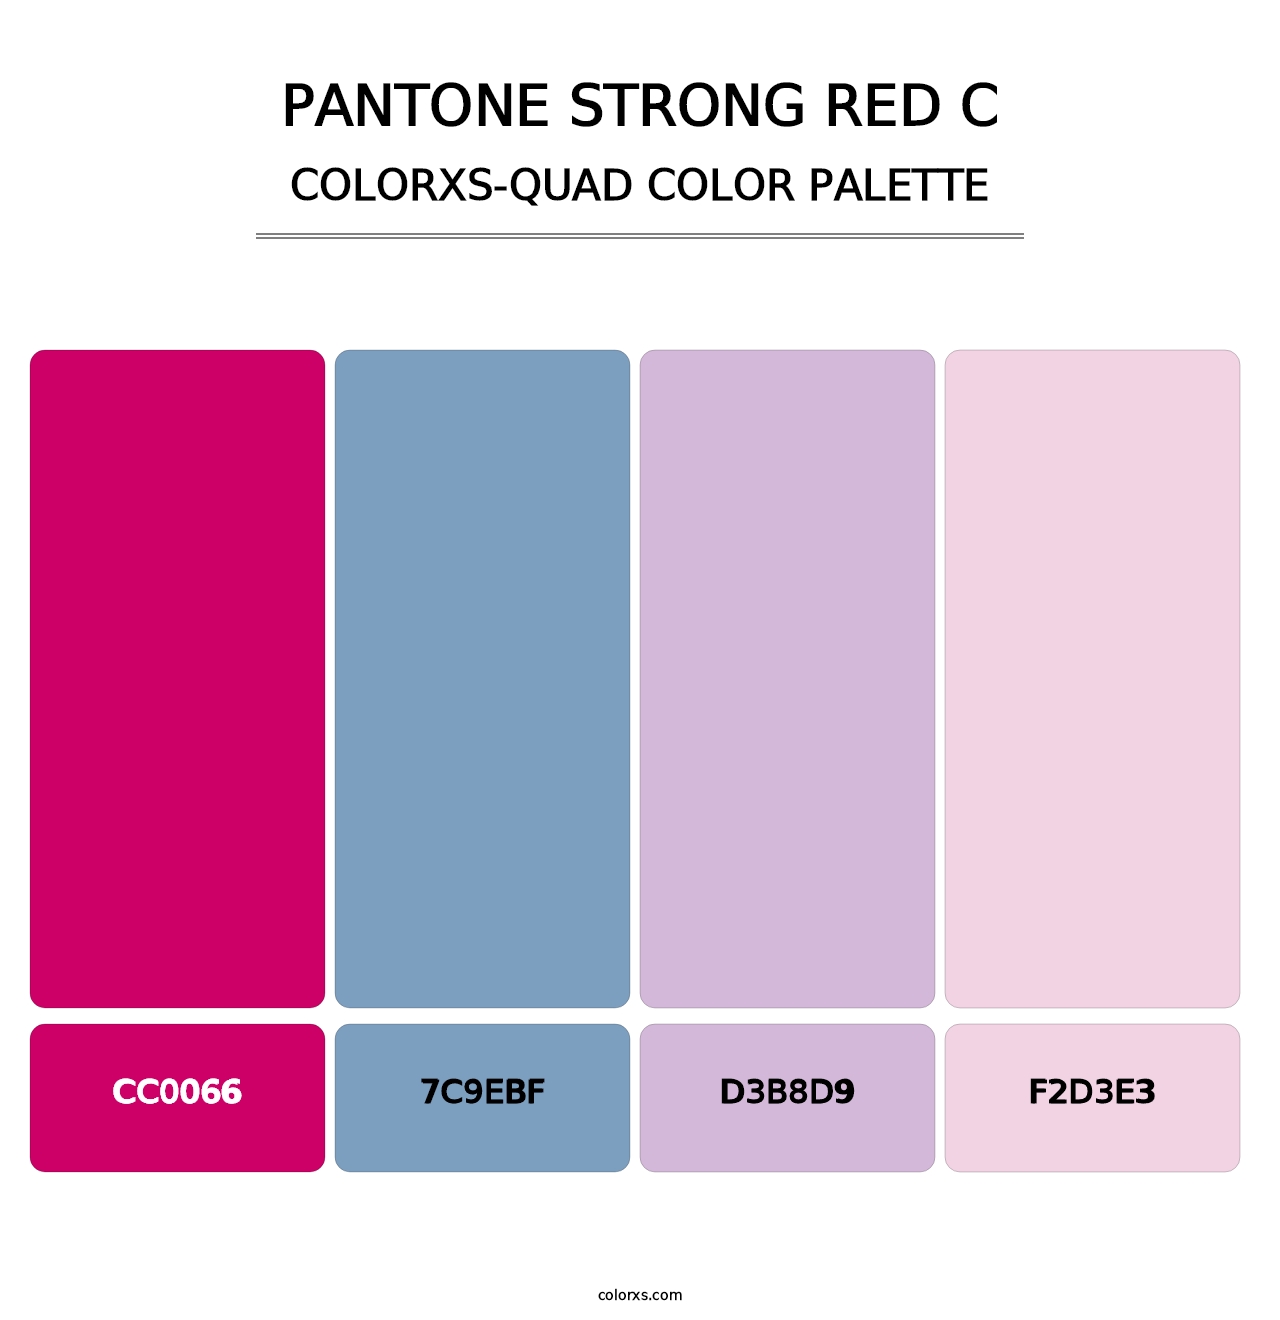 PANTONE Strong Red C - Colorxs Quad Palette